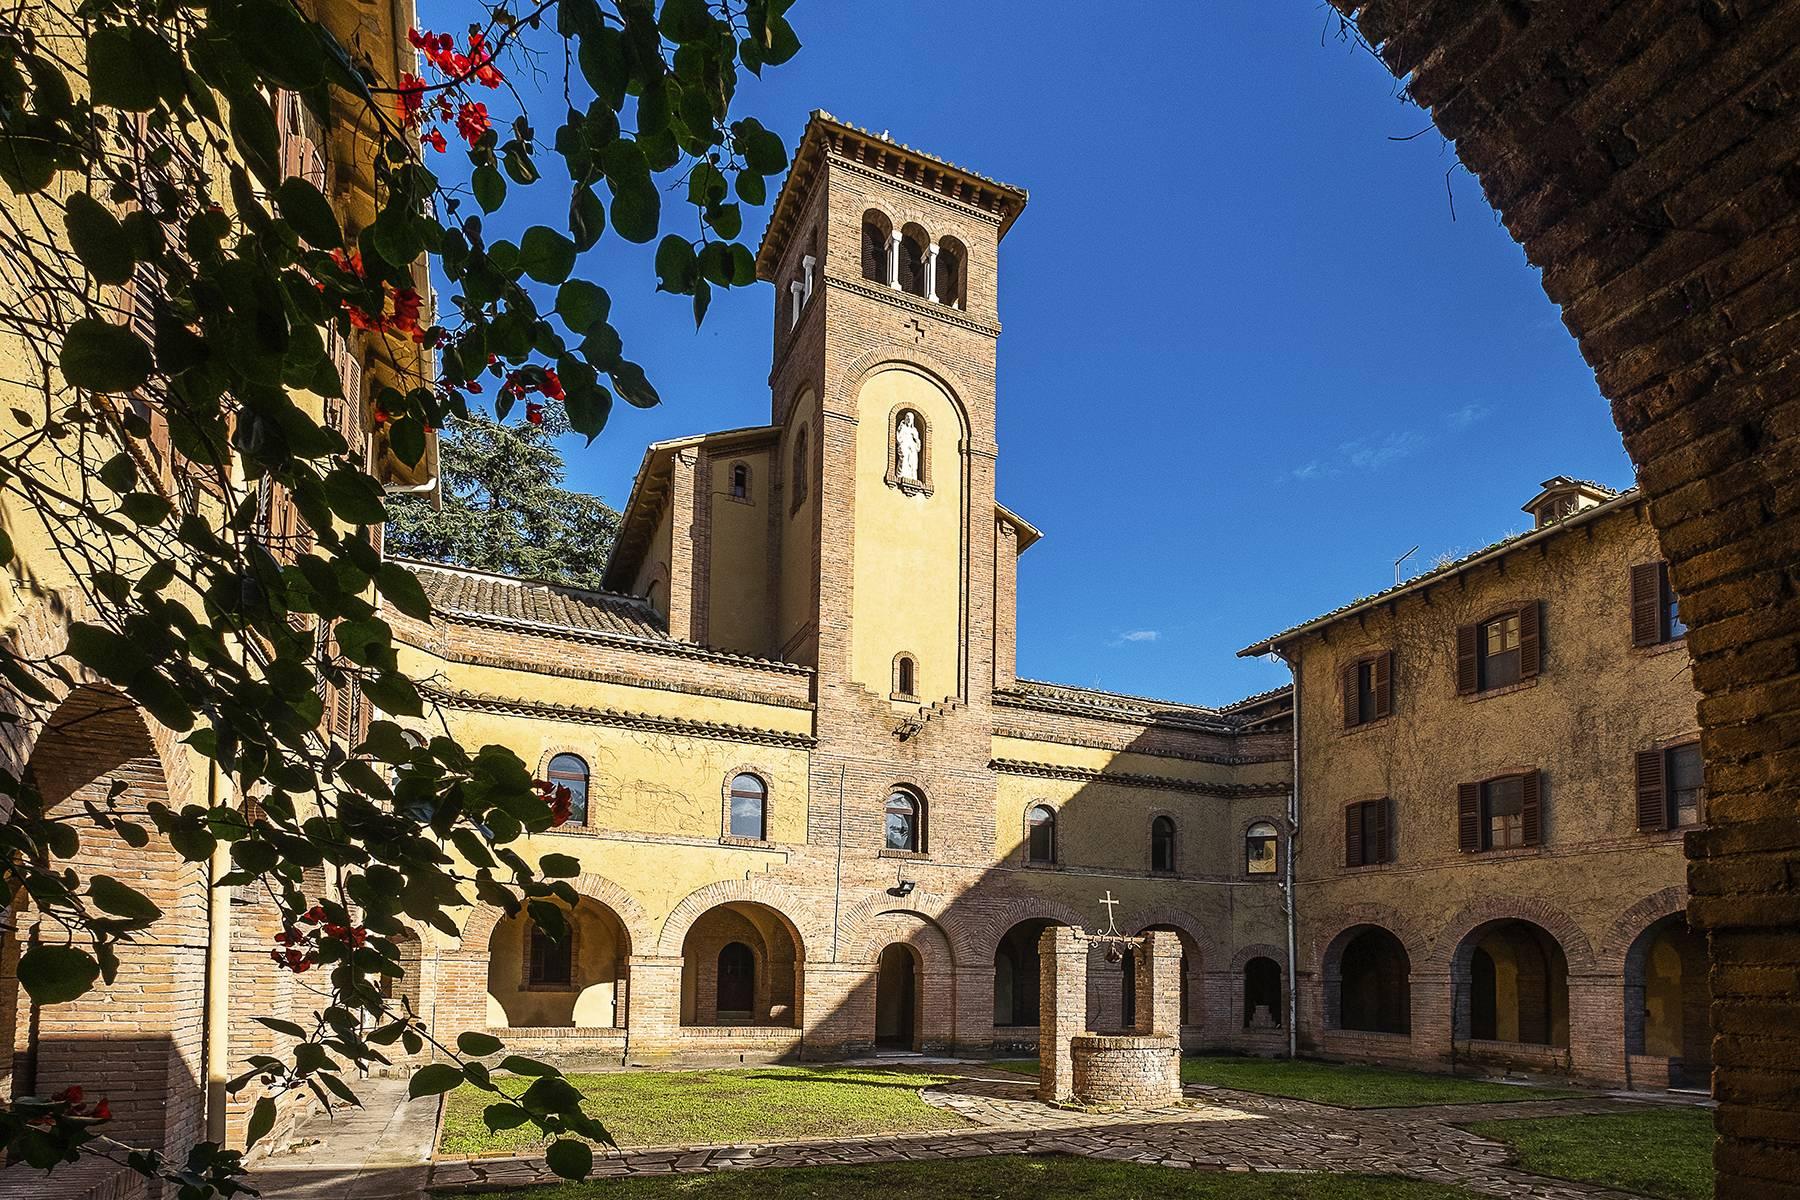 Magnificent monastery in Rome prime location - 1